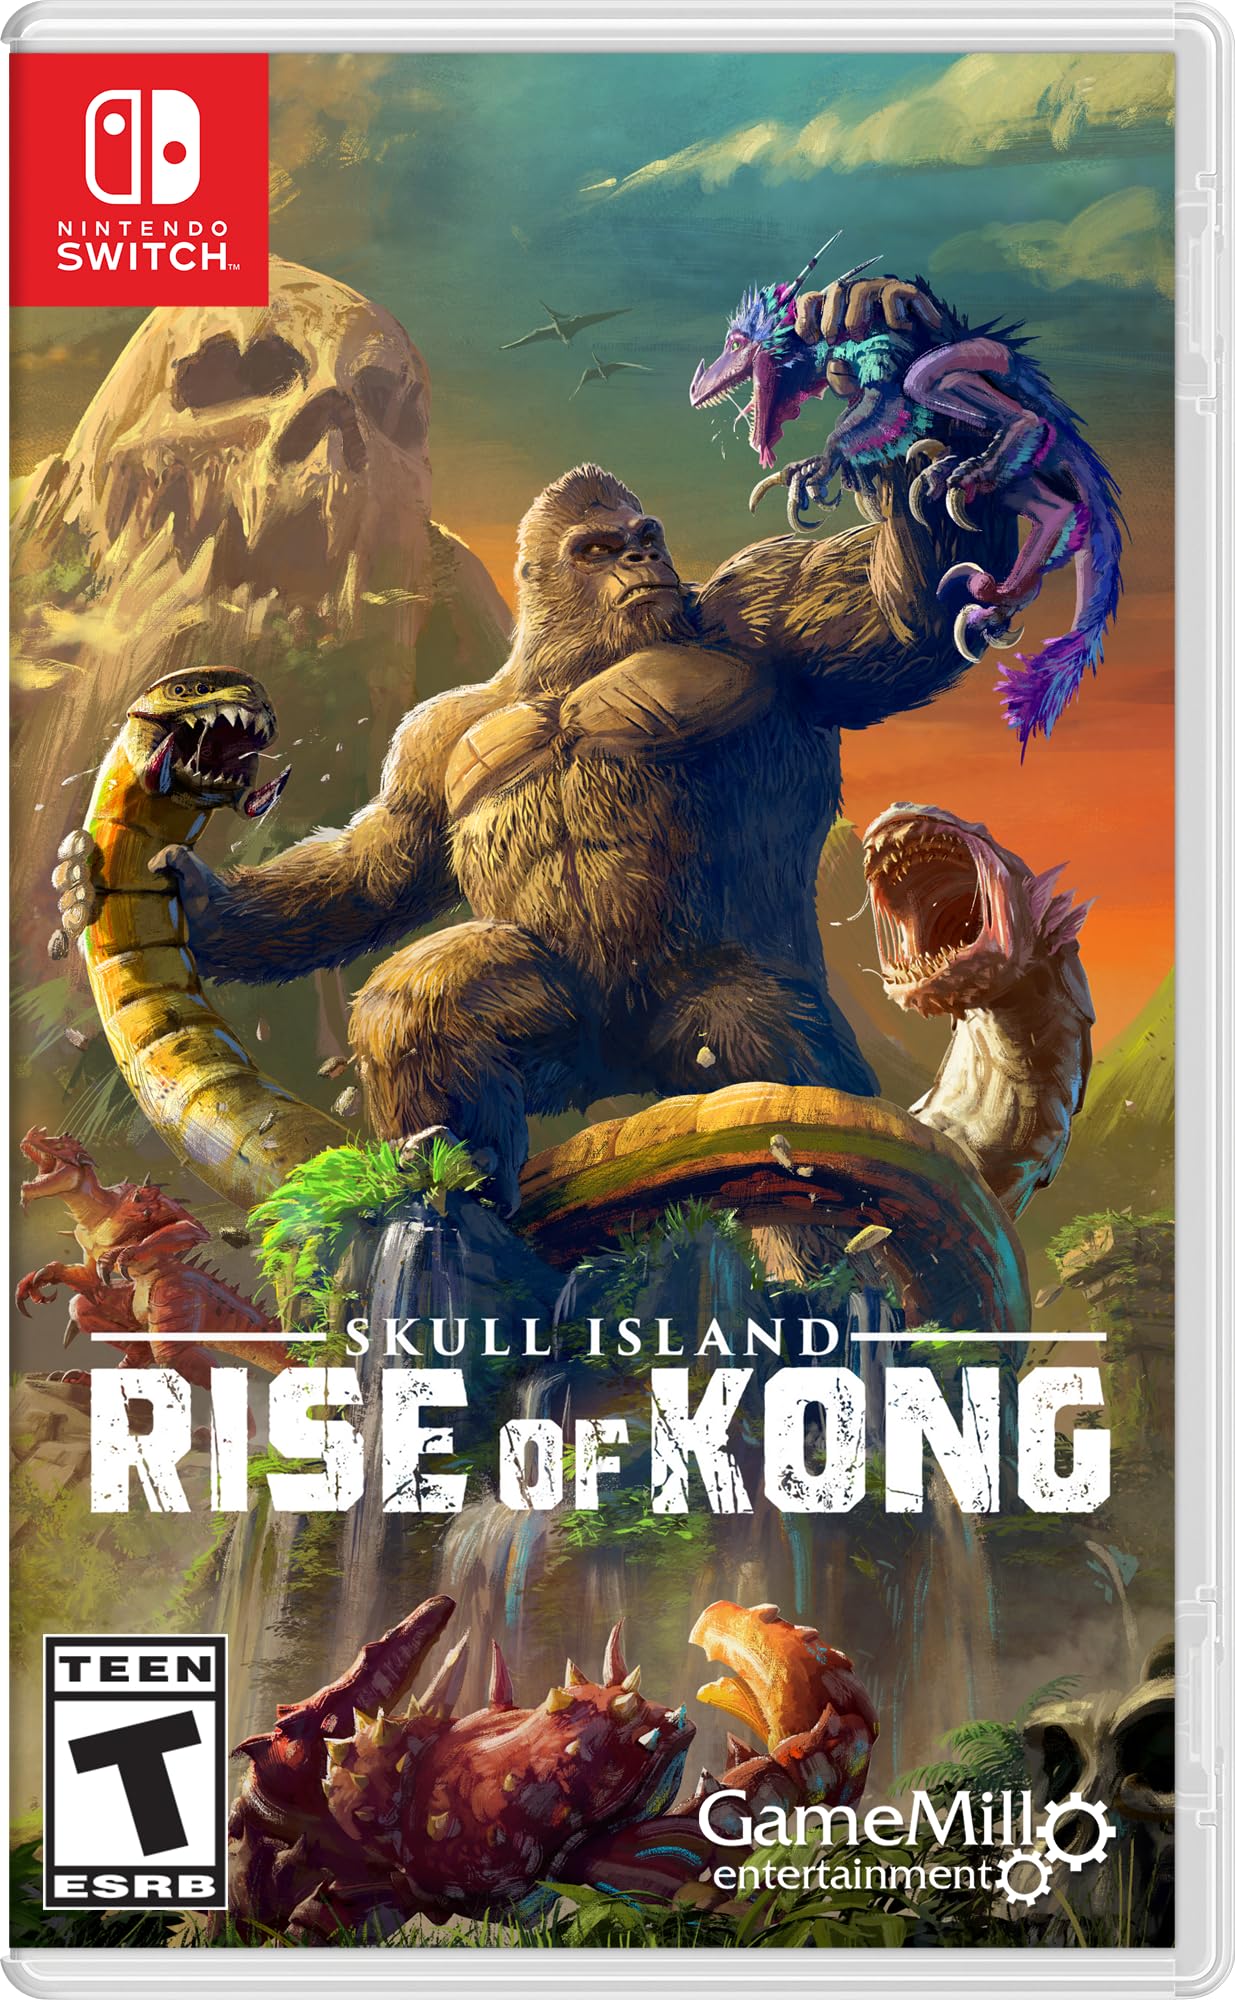 Skull Island: Rise of Kong - Nintendo Switch $19.79